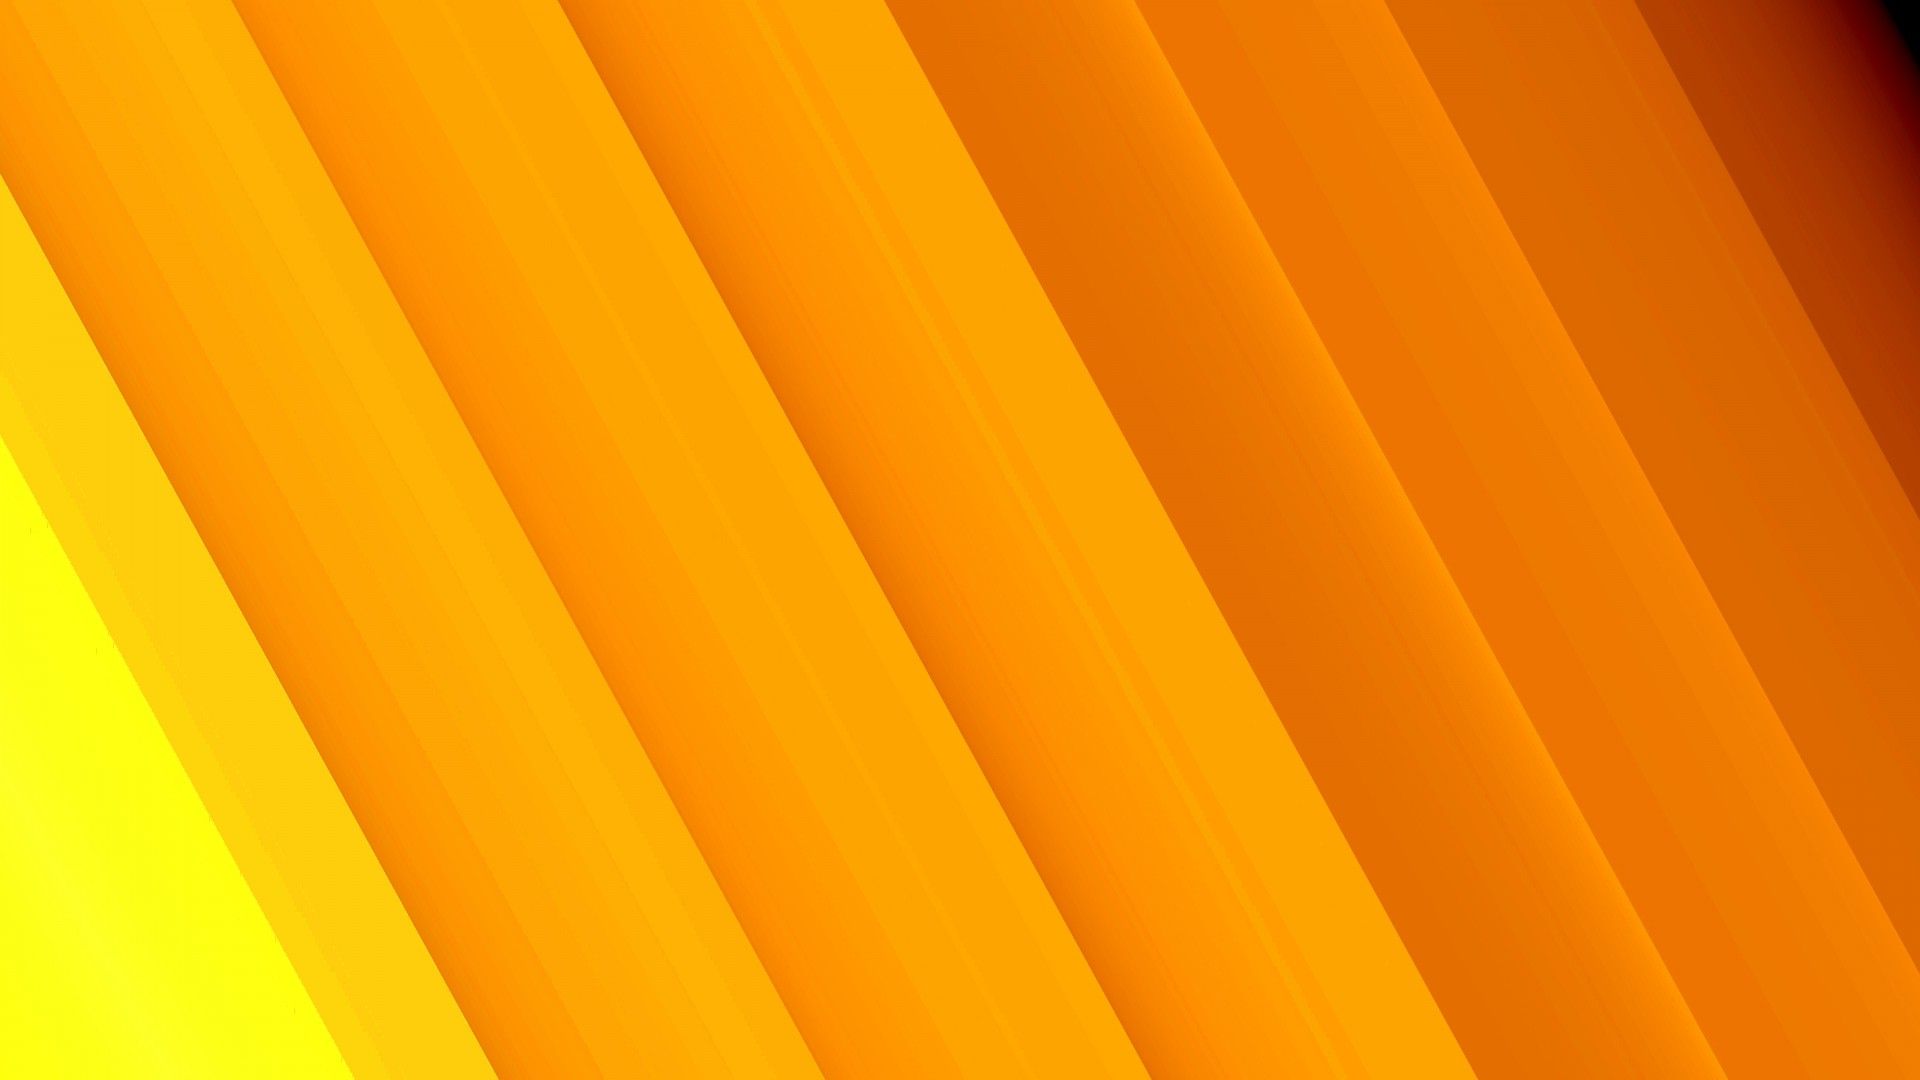 Orange And White hd wallpaper download